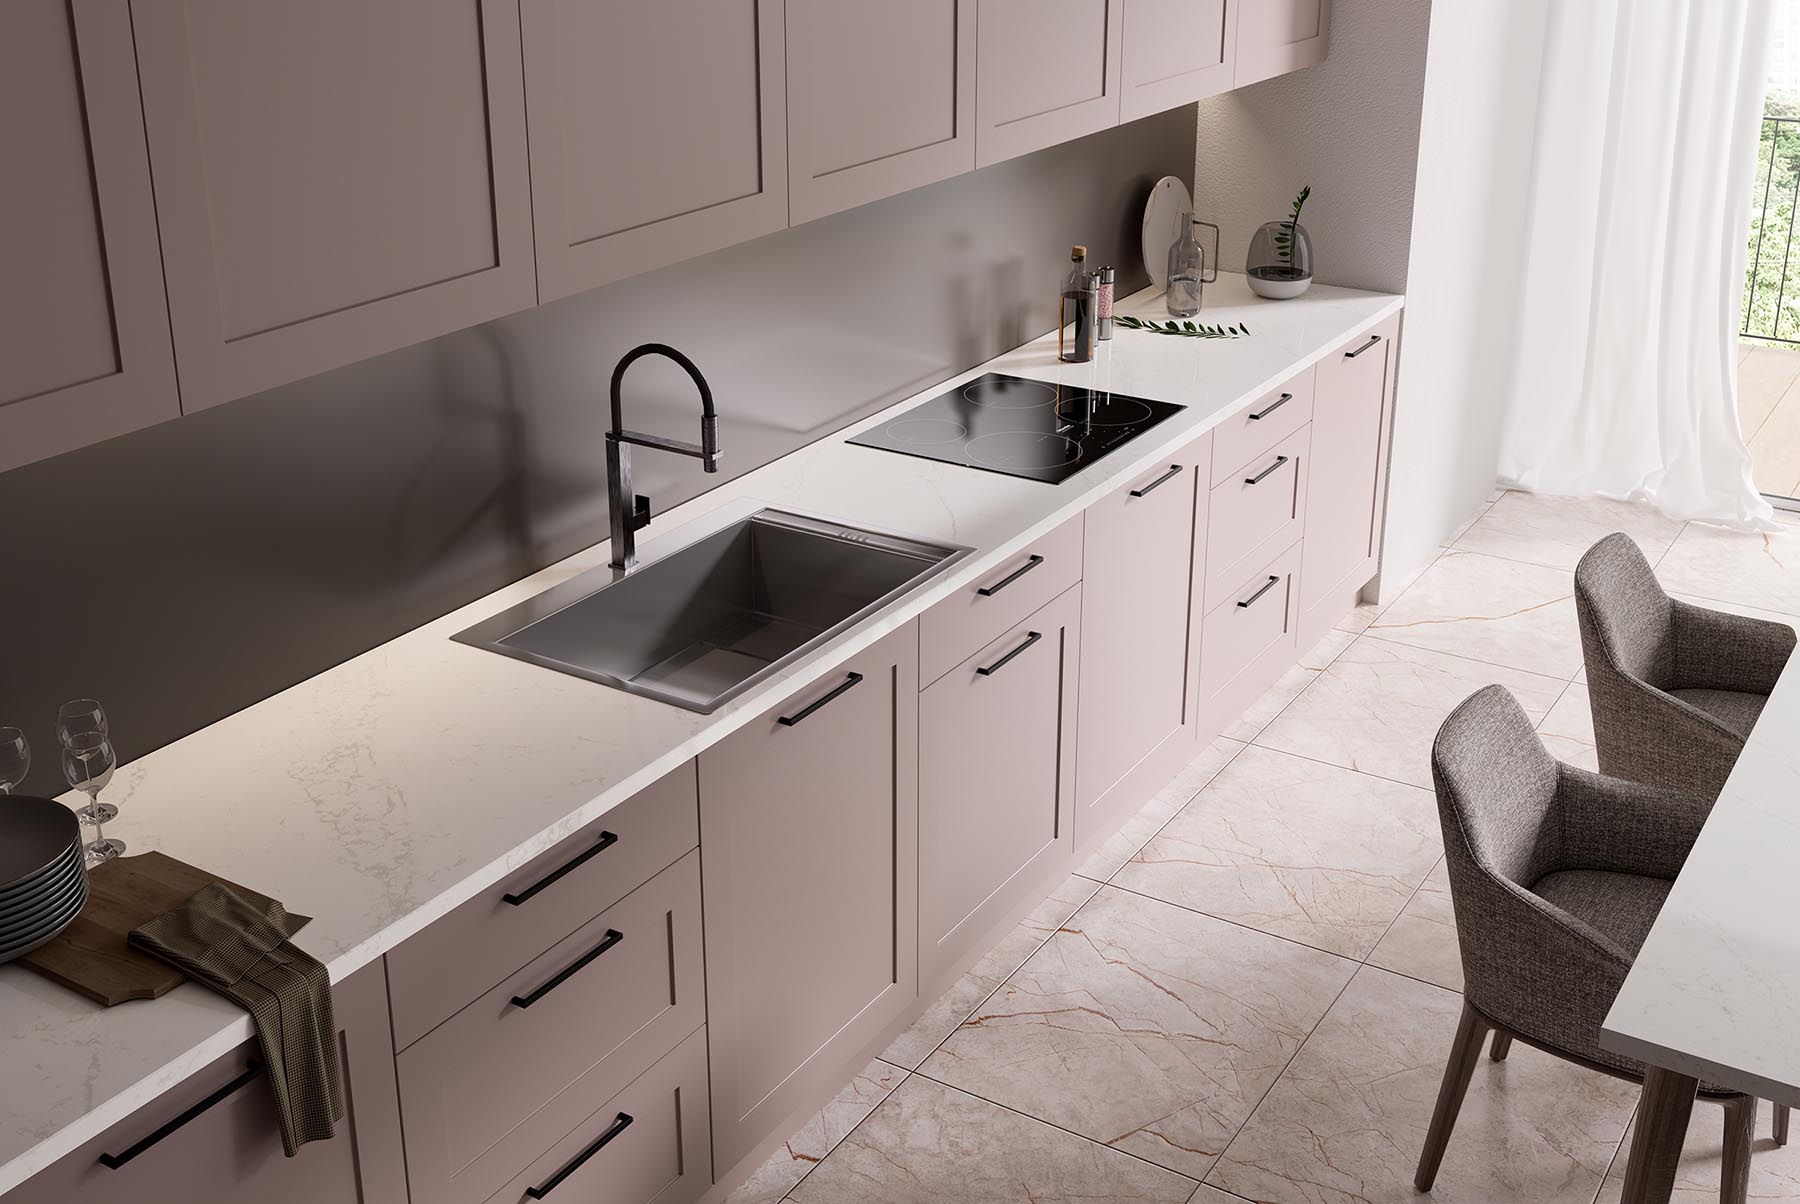 Viatara Lumina modern kitchen with sink and stove top